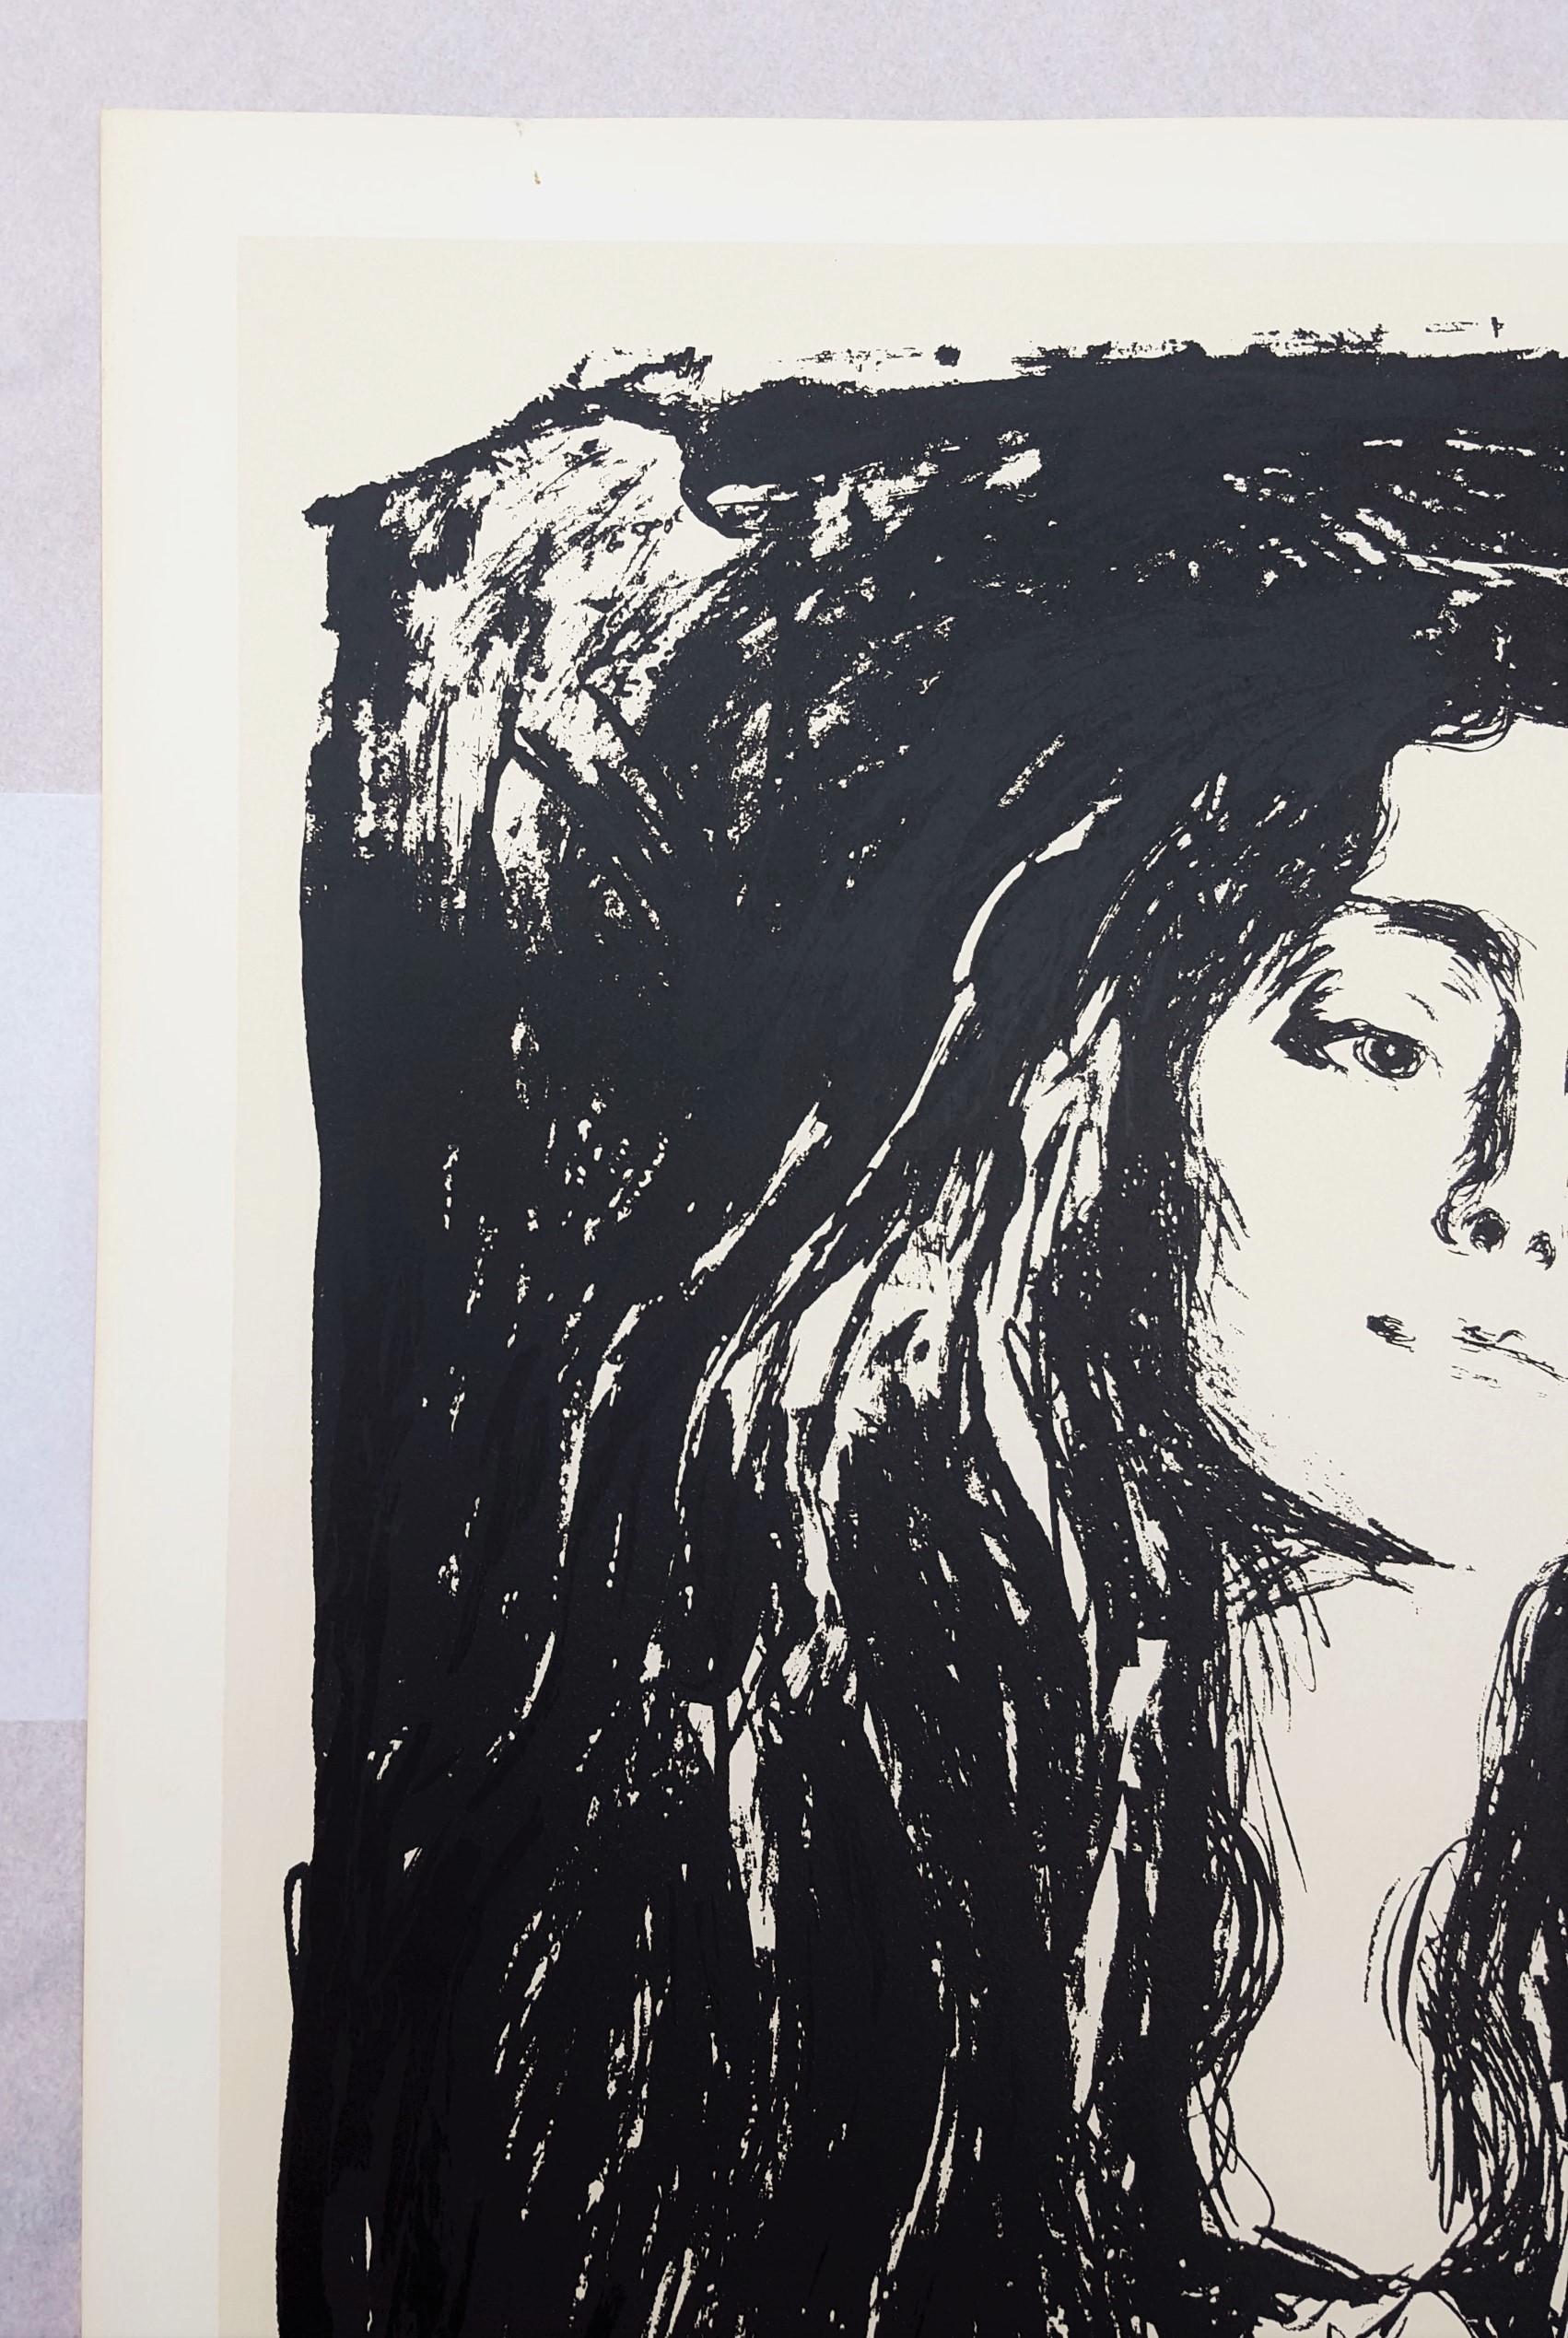 Künstler: (nach) Edvard Munch (Norweger, 1863-1944)
Titel: 